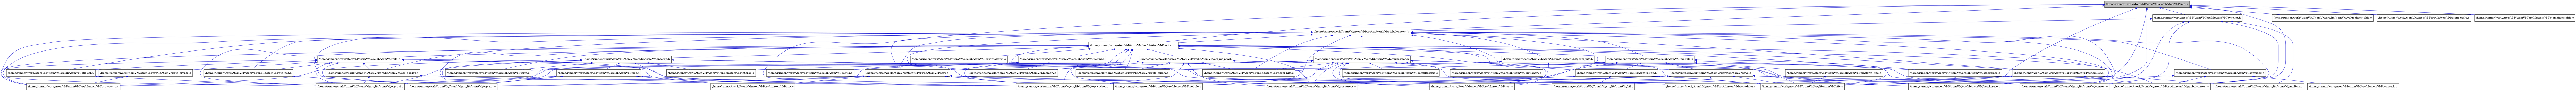 digraph {
    graph [bgcolor="#00000000"]
    node [shape=rectangle style=filled fillcolor="#FFFFFF" font=Helvetica padding=2]
    edge [color="#1414CE"]
    "7" [label="/home/runner/work/AtomVM/AtomVM/src/libAtomVM/bif.c" tooltip="/home/runner/work/AtomVM/AtomVM/src/libAtomVM/bif.c"]
    "48" [label="/home/runner/work/AtomVM/AtomVM/src/libAtomVM/dictionary.c" tooltip="/home/runner/work/AtomVM/AtomVM/src/libAtomVM/dictionary.c"]
    "6" [label="/home/runner/work/AtomVM/AtomVM/src/libAtomVM/bif.h" tooltip="/home/runner/work/AtomVM/AtomVM/src/libAtomVM/bif.h"]
    "30" [label="/home/runner/work/AtomVM/AtomVM/src/libAtomVM/platform_nifs.h" tooltip="/home/runner/work/AtomVM/AtomVM/src/libAtomVM/platform_nifs.h"]
    "18" [label="/home/runner/work/AtomVM/AtomVM/src/libAtomVM/posix_nifs.c" tooltip="/home/runner/work/AtomVM/AtomVM/src/libAtomVM/posix_nifs.c"]
    "49" [label="/home/runner/work/AtomVM/AtomVM/src/libAtomVM/posix_nifs.h" tooltip="/home/runner/work/AtomVM/AtomVM/src/libAtomVM/posix_nifs.h"]
    "47" [label="/home/runner/work/AtomVM/AtomVM/src/libAtomVM/defaultatoms.c" tooltip="/home/runner/work/AtomVM/AtomVM/src/libAtomVM/defaultatoms.c"]
    "50" [label="/home/runner/work/AtomVM/AtomVM/src/libAtomVM/synclist.h" tooltip="/home/runner/work/AtomVM/AtomVM/src/libAtomVM/synclist.h"]
    "46" [label="/home/runner/work/AtomVM/AtomVM/src/libAtomVM/defaultatoms.h" tooltip="/home/runner/work/AtomVM/AtomVM/src/libAtomVM/defaultatoms.h"]
    "24" [label="/home/runner/work/AtomVM/AtomVM/src/libAtomVM/inet.c" tooltip="/home/runner/work/AtomVM/AtomVM/src/libAtomVM/inet.c"]
    "51" [label="/home/runner/work/AtomVM/AtomVM/src/libAtomVM/valueshashtable.c" tooltip="/home/runner/work/AtomVM/AtomVM/src/libAtomVM/valueshashtable.c"]
    "23" [label="/home/runner/work/AtomVM/AtomVM/src/libAtomVM/inet.h" tooltip="/home/runner/work/AtomVM/AtomVM/src/libAtomVM/inet.h"]
    "13" [label="/home/runner/work/AtomVM/AtomVM/src/libAtomVM/scheduler.c" tooltip="/home/runner/work/AtomVM/AtomVM/src/libAtomVM/scheduler.c"]
    "41" [label="/home/runner/work/AtomVM/AtomVM/src/libAtomVM/scheduler.h" tooltip="/home/runner/work/AtomVM/AtomVM/src/libAtomVM/scheduler.h"]
    "4" [label="/home/runner/work/AtomVM/AtomVM/src/libAtomVM/context.c" tooltip="/home/runner/work/AtomVM/AtomVM/src/libAtomVM/context.c"]
    "5" [label="/home/runner/work/AtomVM/AtomVM/src/libAtomVM/context.h" tooltip="/home/runner/work/AtomVM/AtomVM/src/libAtomVM/context.h"]
    "39" [label="/home/runner/work/AtomVM/AtomVM/src/libAtomVM/port.c" tooltip="/home/runner/work/AtomVM/AtomVM/src/libAtomVM/port.c"]
    "40" [label="/home/runner/work/AtomVM/AtomVM/src/libAtomVM/port.h" tooltip="/home/runner/work/AtomVM/AtomVM/src/libAtomVM/port.h"]
    "2" [label="/home/runner/work/AtomVM/AtomVM/src/libAtomVM/atom_table.c" tooltip="/home/runner/work/AtomVM/AtomVM/src/libAtomVM/atom_table.c"]
    "32" [label="/home/runner/work/AtomVM/AtomVM/src/libAtomVM/stacktrace.c" tooltip="/home/runner/work/AtomVM/AtomVM/src/libAtomVM/stacktrace.c"]
    "31" [label="/home/runner/work/AtomVM/AtomVM/src/libAtomVM/stacktrace.h" tooltip="/home/runner/work/AtomVM/AtomVM/src/libAtomVM/stacktrace.h"]
    "19" [label="/home/runner/work/AtomVM/AtomVM/src/libAtomVM/refc_binary.c" tooltip="/home/runner/work/AtomVM/AtomVM/src/libAtomVM/refc_binary.c"]
    "42" [label="/home/runner/work/AtomVM/AtomVM/src/libAtomVM/mailbox.c" tooltip="/home/runner/work/AtomVM/AtomVM/src/libAtomVM/mailbox.c"]
    "8" [label="/home/runner/work/AtomVM/AtomVM/src/libAtomVM/module.c" tooltip="/home/runner/work/AtomVM/AtomVM/src/libAtomVM/module.c"]
    "29" [label="/home/runner/work/AtomVM/AtomVM/src/libAtomVM/module.h" tooltip="/home/runner/work/AtomVM/AtomVM/src/libAtomVM/module.h"]
    "45" [label="/home/runner/work/AtomVM/AtomVM/src/libAtomVM/avmpack.c" tooltip="/home/runner/work/AtomVM/AtomVM/src/libAtomVM/avmpack.c"]
    "44" [label="/home/runner/work/AtomVM/AtomVM/src/libAtomVM/avmpack.h" tooltip="/home/runner/work/AtomVM/AtomVM/src/libAtomVM/avmpack.h"]
    "28" [label="/home/runner/work/AtomVM/AtomVM/src/libAtomVM/term.c" tooltip="/home/runner/work/AtomVM/AtomVM/src/libAtomVM/term.c"]
    "26" [label="/home/runner/work/AtomVM/AtomVM/src/libAtomVM/interop.c" tooltip="/home/runner/work/AtomVM/AtomVM/src/libAtomVM/interop.c"]
    "17" [label="/home/runner/work/AtomVM/AtomVM/src/libAtomVM/otp_ssl.c" tooltip="/home/runner/work/AtomVM/AtomVM/src/libAtomVM/otp_ssl.c"]
    "22" [label="/home/runner/work/AtomVM/AtomVM/src/libAtomVM/interop.h" tooltip="/home/runner/work/AtomVM/AtomVM/src/libAtomVM/interop.h"]
    "38" [label="/home/runner/work/AtomVM/AtomVM/src/libAtomVM/otp_ssl.h" tooltip="/home/runner/work/AtomVM/AtomVM/src/libAtomVM/otp_ssl.h"]
    "20" [label="/home/runner/work/AtomVM/AtomVM/src/libAtomVM/resources.c" tooltip="/home/runner/work/AtomVM/AtomVM/src/libAtomVM/resources.c"]
    "27" [label="/home/runner/work/AtomVM/AtomVM/src/libAtomVM/otp_crypto.c" tooltip="/home/runner/work/AtomVM/AtomVM/src/libAtomVM/otp_crypto.c"]
    "35" [label="/home/runner/work/AtomVM/AtomVM/src/libAtomVM/otp_crypto.h" tooltip="/home/runner/work/AtomVM/AtomVM/src/libAtomVM/otp_crypto.h"]
    "1" [label="/home/runner/work/AtomVM/AtomVM/src/libAtomVM/smp.h" tooltip="/home/runner/work/AtomVM/AtomVM/src/libAtomVM/smp.h" fillcolor="#BFBFBF"]
    "25" [label="/home/runner/work/AtomVM/AtomVM/src/libAtomVM/otp_net.c" tooltip="/home/runner/work/AtomVM/AtomVM/src/libAtomVM/otp_net.c"]
    "36" [label="/home/runner/work/AtomVM/AtomVM/src/libAtomVM/otp_net.h" tooltip="/home/runner/work/AtomVM/AtomVM/src/libAtomVM/otp_net.h"]
    "14" [label="/home/runner/work/AtomVM/AtomVM/src/libAtomVM/erl_nif_priv.h" tooltip="/home/runner/work/AtomVM/AtomVM/src/libAtomVM/erl_nif_priv.h"]
    "33" [label="/home/runner/work/AtomVM/AtomVM/src/libAtomVM/sys.h" tooltip="/home/runner/work/AtomVM/AtomVM/src/libAtomVM/sys.h"]
    "3" [label="/home/runner/work/AtomVM/AtomVM/src/libAtomVM/atomshashtable.c" tooltip="/home/runner/work/AtomVM/AtomVM/src/libAtomVM/atomshashtable.c"]
    "9" [label="/home/runner/work/AtomVM/AtomVM/src/libAtomVM/nifs.c" tooltip="/home/runner/work/AtomVM/AtomVM/src/libAtomVM/nifs.c"]
    "34" [label="/home/runner/work/AtomVM/AtomVM/src/libAtomVM/nifs.h" tooltip="/home/runner/work/AtomVM/AtomVM/src/libAtomVM/nifs.h"]
    "11" [label="/home/runner/work/AtomVM/AtomVM/src/libAtomVM/debug.c" tooltip="/home/runner/work/AtomVM/AtomVM/src/libAtomVM/debug.c"]
    "10" [label="/home/runner/work/AtomVM/AtomVM/src/libAtomVM/debug.h" tooltip="/home/runner/work/AtomVM/AtomVM/src/libAtomVM/debug.h"]
    "15" [label="/home/runner/work/AtomVM/AtomVM/src/libAtomVM/globalcontext.c" tooltip="/home/runner/work/AtomVM/AtomVM/src/libAtomVM/globalcontext.c"]
    "43" [label="/home/runner/work/AtomVM/AtomVM/src/libAtomVM/globalcontext.h" tooltip="/home/runner/work/AtomVM/AtomVM/src/libAtomVM/globalcontext.h"]
    "12" [label="/home/runner/work/AtomVM/AtomVM/src/libAtomVM/memory.c" tooltip="/home/runner/work/AtomVM/AtomVM/src/libAtomVM/memory.c"]
    "16" [label="/home/runner/work/AtomVM/AtomVM/src/libAtomVM/otp_socket.c" tooltip="/home/runner/work/AtomVM/AtomVM/src/libAtomVM/otp_socket.c"]
    "37" [label="/home/runner/work/AtomVM/AtomVM/src/libAtomVM/otp_socket.h" tooltip="/home/runner/work/AtomVM/AtomVM/src/libAtomVM/otp_socket.h"]
    "21" [label="/home/runner/work/AtomVM/AtomVM/src/libAtomVM/externalterm.c" tooltip="/home/runner/work/AtomVM/AtomVM/src/libAtomVM/externalterm.c"]
    "6" -> "7" [dir=back tooltip="include"]
    "6" -> "8" [dir=back tooltip="include"]
    "6" -> "9" [dir=back tooltip="include"]
    "30" -> "9" [dir=back tooltip="include"]
    "49" -> "15" [dir=back tooltip="include"]
    "49" -> "9" [dir=back tooltip="include"]
    "49" -> "16" [dir=back tooltip="include"]
    "49" -> "18" [dir=back tooltip="include"]
    "50" -> "4" [dir=back tooltip="include"]
    "50" -> "15" [dir=back tooltip="include"]
    "50" -> "43" [dir=back tooltip="include"]
    "50" -> "42" [dir=back tooltip="include"]
    "50" -> "9" [dir=back tooltip="include"]
    "46" -> "7" [dir=back tooltip="include"]
    "46" -> "47" [dir=back tooltip="include"]
    "46" -> "48" [dir=back tooltip="include"]
    "46" -> "15" [dir=back tooltip="include"]
    "46" -> "26" [dir=back tooltip="include"]
    "46" -> "9" [dir=back tooltip="include"]
    "46" -> "27" [dir=back tooltip="include"]
    "46" -> "25" [dir=back tooltip="include"]
    "46" -> "16" [dir=back tooltip="include"]
    "46" -> "17" [dir=back tooltip="include"]
    "46" -> "39" [dir=back tooltip="include"]
    "46" -> "40" [dir=back tooltip="include"]
    "46" -> "18" [dir=back tooltip="include"]
    "46" -> "20" [dir=back tooltip="include"]
    "46" -> "32" [dir=back tooltip="include"]
    "23" -> "24" [dir=back tooltip="include"]
    "23" -> "25" [dir=back tooltip="include"]
    "23" -> "16" [dir=back tooltip="include"]
    "23" -> "17" [dir=back tooltip="include"]
    "41" -> "15" [dir=back tooltip="include"]
    "41" -> "42" [dir=back tooltip="include"]
    "41" -> "9" [dir=back tooltip="include"]
    "41" -> "16" [dir=back tooltip="include"]
    "41" -> "13" [dir=back tooltip="include"]
    "5" -> "6" [dir=back tooltip="include"]
    "5" -> "4" [dir=back tooltip="include"]
    "5" -> "10" [dir=back tooltip="include"]
    "5" -> "14" [dir=back tooltip="include"]
    "5" -> "21" [dir=back tooltip="include"]
    "5" -> "15" [dir=back tooltip="include"]
    "5" -> "22" [dir=back tooltip="include"]
    "5" -> "12" [dir=back tooltip="include"]
    "5" -> "8" [dir=back tooltip="include"]
    "5" -> "29" [dir=back tooltip="include"]
    "5" -> "9" [dir=back tooltip="include"]
    "5" -> "34" [dir=back tooltip="include"]
    "5" -> "27" [dir=back tooltip="include"]
    "5" -> "25" [dir=back tooltip="include"]
    "5" -> "16" [dir=back tooltip="include"]
    "5" -> "17" [dir=back tooltip="include"]
    "5" -> "39" [dir=back tooltip="include"]
    "5" -> "40" [dir=back tooltip="include"]
    "5" -> "19" [dir=back tooltip="include"]
    "5" -> "20" [dir=back tooltip="include"]
    "5" -> "41" [dir=back tooltip="include"]
    "5" -> "31" [dir=back tooltip="include"]
    "5" -> "28" [dir=back tooltip="include"]
    "40" -> "24" [dir=back tooltip="include"]
    "40" -> "9" [dir=back tooltip="include"]
    "40" -> "25" [dir=back tooltip="include"]
    "40" -> "16" [dir=back tooltip="include"]
    "40" -> "17" [dir=back tooltip="include"]
    "40" -> "39" [dir=back tooltip="include"]
    "31" -> "32" [dir=back tooltip="include"]
    "29" -> "6" [dir=back tooltip="include"]
    "29" -> "8" [dir=back tooltip="include"]
    "29" -> "9" [dir=back tooltip="include"]
    "29" -> "30" [dir=back tooltip="include"]
    "29" -> "31" [dir=back tooltip="include"]
    "29" -> "33" [dir=back tooltip="include"]
    "29" -> "28" [dir=back tooltip="include"]
    "44" -> "45" [dir=back tooltip="include"]
    "44" -> "15" [dir=back tooltip="include"]
    "44" -> "9" [dir=back tooltip="include"]
    "22" -> "23" [dir=back tooltip="include"]
    "22" -> "26" [dir=back tooltip="include"]
    "22" -> "9" [dir=back tooltip="include"]
    "22" -> "27" [dir=back tooltip="include"]
    "22" -> "25" [dir=back tooltip="include"]
    "22" -> "16" [dir=back tooltip="include"]
    "22" -> "17" [dir=back tooltip="include"]
    "22" -> "18" [dir=back tooltip="include"]
    "22" -> "28" [dir=back tooltip="include"]
    "38" -> "17" [dir=back tooltip="include"]
    "35" -> "27" [dir=back tooltip="include"]
    "1" -> "2" [dir=back tooltip="include"]
    "1" -> "3" [dir=back tooltip="include"]
    "1" -> "4" [dir=back tooltip="include"]
    "1" -> "5" [dir=back tooltip="include"]
    "1" -> "15" [dir=back tooltip="include"]
    "1" -> "43" [dir=back tooltip="include"]
    "1" -> "8" [dir=back tooltip="include"]
    "1" -> "9" [dir=back tooltip="include"]
    "1" -> "13" [dir=back tooltip="include"]
    "1" -> "50" [dir=back tooltip="include"]
    "1" -> "51" [dir=back tooltip="include"]
    "36" -> "25" [dir=back tooltip="include"]
    "14" -> "4" [dir=back tooltip="include"]
    "14" -> "15" [dir=back tooltip="include"]
    "14" -> "12" [dir=back tooltip="include"]
    "14" -> "16" [dir=back tooltip="include"]
    "14" -> "17" [dir=back tooltip="include"]
    "14" -> "18" [dir=back tooltip="include"]
    "14" -> "19" [dir=back tooltip="include"]
    "14" -> "20" [dir=back tooltip="include"]
    "33" -> "4" [dir=back tooltip="include"]
    "33" -> "15" [dir=back tooltip="include"]
    "33" -> "8" [dir=back tooltip="include"]
    "33" -> "9" [dir=back tooltip="include"]
    "33" -> "16" [dir=back tooltip="include"]
    "33" -> "20" [dir=back tooltip="include"]
    "33" -> "13" [dir=back tooltip="include"]
    "34" -> "8" [dir=back tooltip="include"]
    "34" -> "9" [dir=back tooltip="include"]
    "34" -> "27" [dir=back tooltip="include"]
    "34" -> "35" [dir=back tooltip="include"]
    "34" -> "25" [dir=back tooltip="include"]
    "34" -> "36" [dir=back tooltip="include"]
    "34" -> "16" [dir=back tooltip="include"]
    "34" -> "37" [dir=back tooltip="include"]
    "34" -> "17" [dir=back tooltip="include"]
    "34" -> "38" [dir=back tooltip="include"]
    "34" -> "18" [dir=back tooltip="include"]
    "10" -> "11" [dir=back tooltip="include"]
    "10" -> "12" [dir=back tooltip="include"]
    "10" -> "13" [dir=back tooltip="include"]
    "43" -> "44" [dir=back tooltip="include"]
    "43" -> "4" [dir=back tooltip="include"]
    "43" -> "5" [dir=back tooltip="include"]
    "43" -> "46" [dir=back tooltip="include"]
    "43" -> "15" [dir=back tooltip="include"]
    "43" -> "12" [dir=back tooltip="include"]
    "43" -> "8" [dir=back tooltip="include"]
    "43" -> "29" [dir=back tooltip="include"]
    "43" -> "9" [dir=back tooltip="include"]
    "43" -> "27" [dir=back tooltip="include"]
    "43" -> "25" [dir=back tooltip="include"]
    "43" -> "36" [dir=back tooltip="include"]
    "43" -> "16" [dir=back tooltip="include"]
    "43" -> "37" [dir=back tooltip="include"]
    "43" -> "17" [dir=back tooltip="include"]
    "43" -> "38" [dir=back tooltip="include"]
    "43" -> "39" [dir=back tooltip="include"]
    "43" -> "40" [dir=back tooltip="include"]
    "43" -> "18" [dir=back tooltip="include"]
    "43" -> "49" [dir=back tooltip="include"]
    "43" -> "41" [dir=back tooltip="include"]
    "43" -> "32" [dir=back tooltip="include"]
    "43" -> "33" [dir=back tooltip="include"]
    "37" -> "16" [dir=back tooltip="include"]
    "37" -> "17" [dir=back tooltip="include"]
}